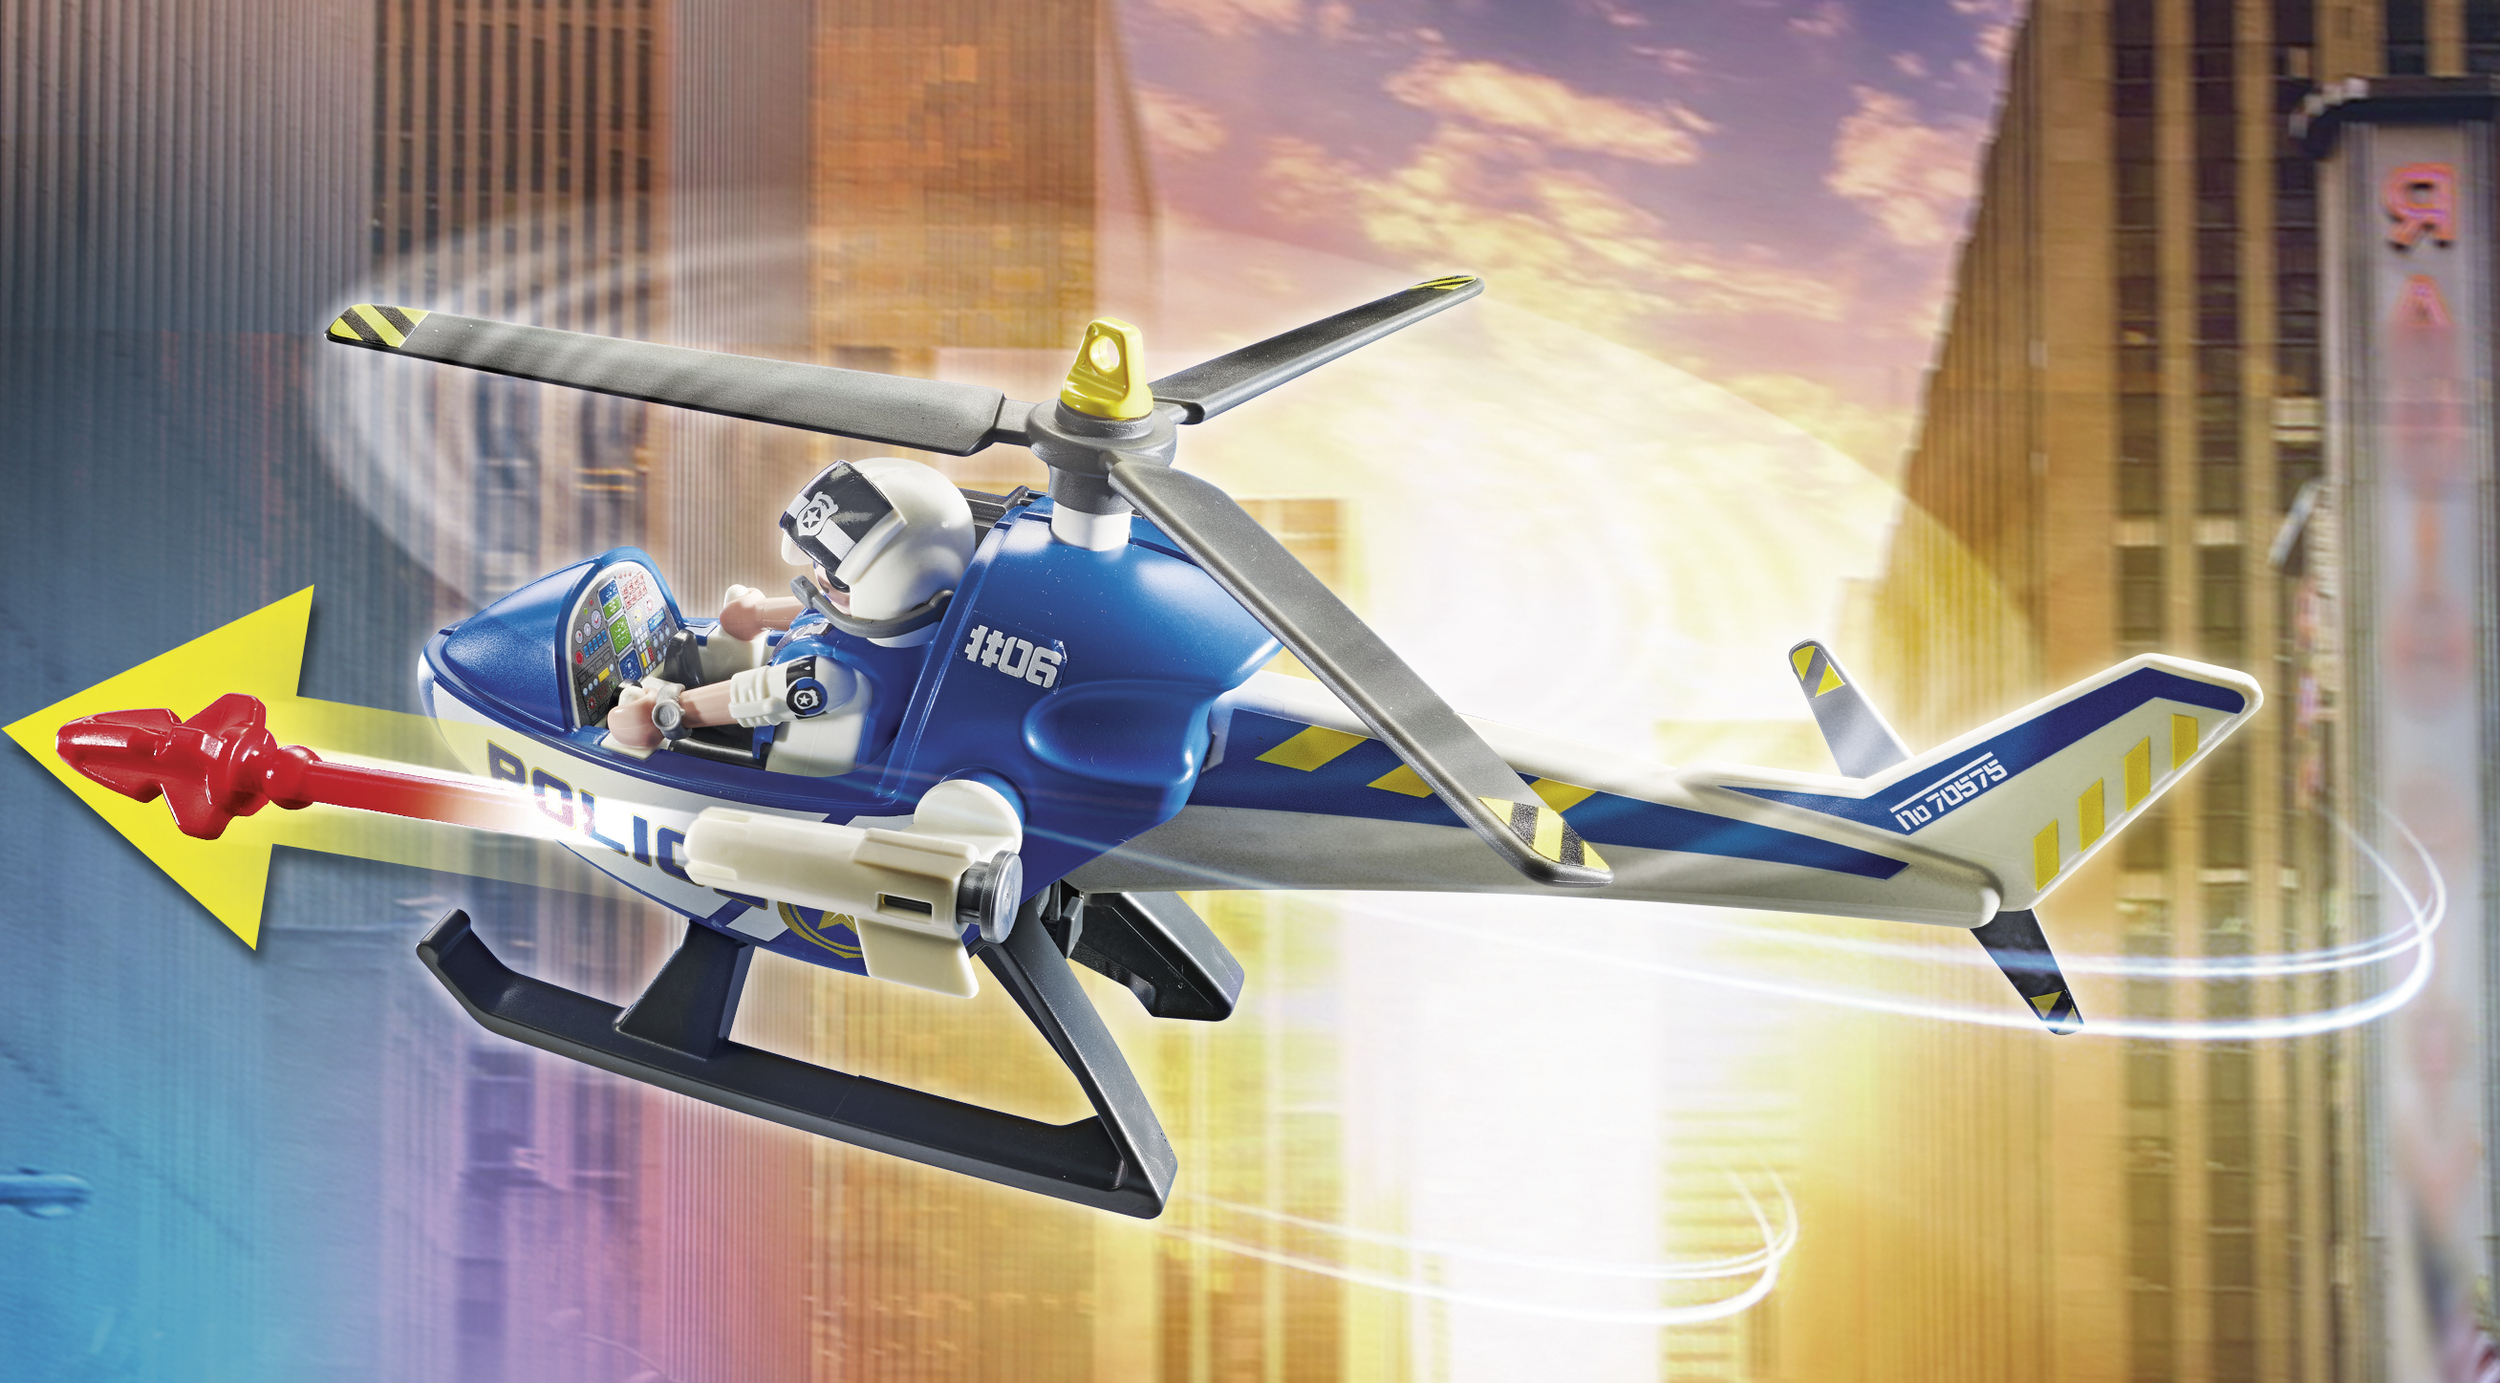 Playmobil City Action Αστυνομικό ελικόπτερο και ληστές με βαν 70575 - Playmobil, Playmobil City Action